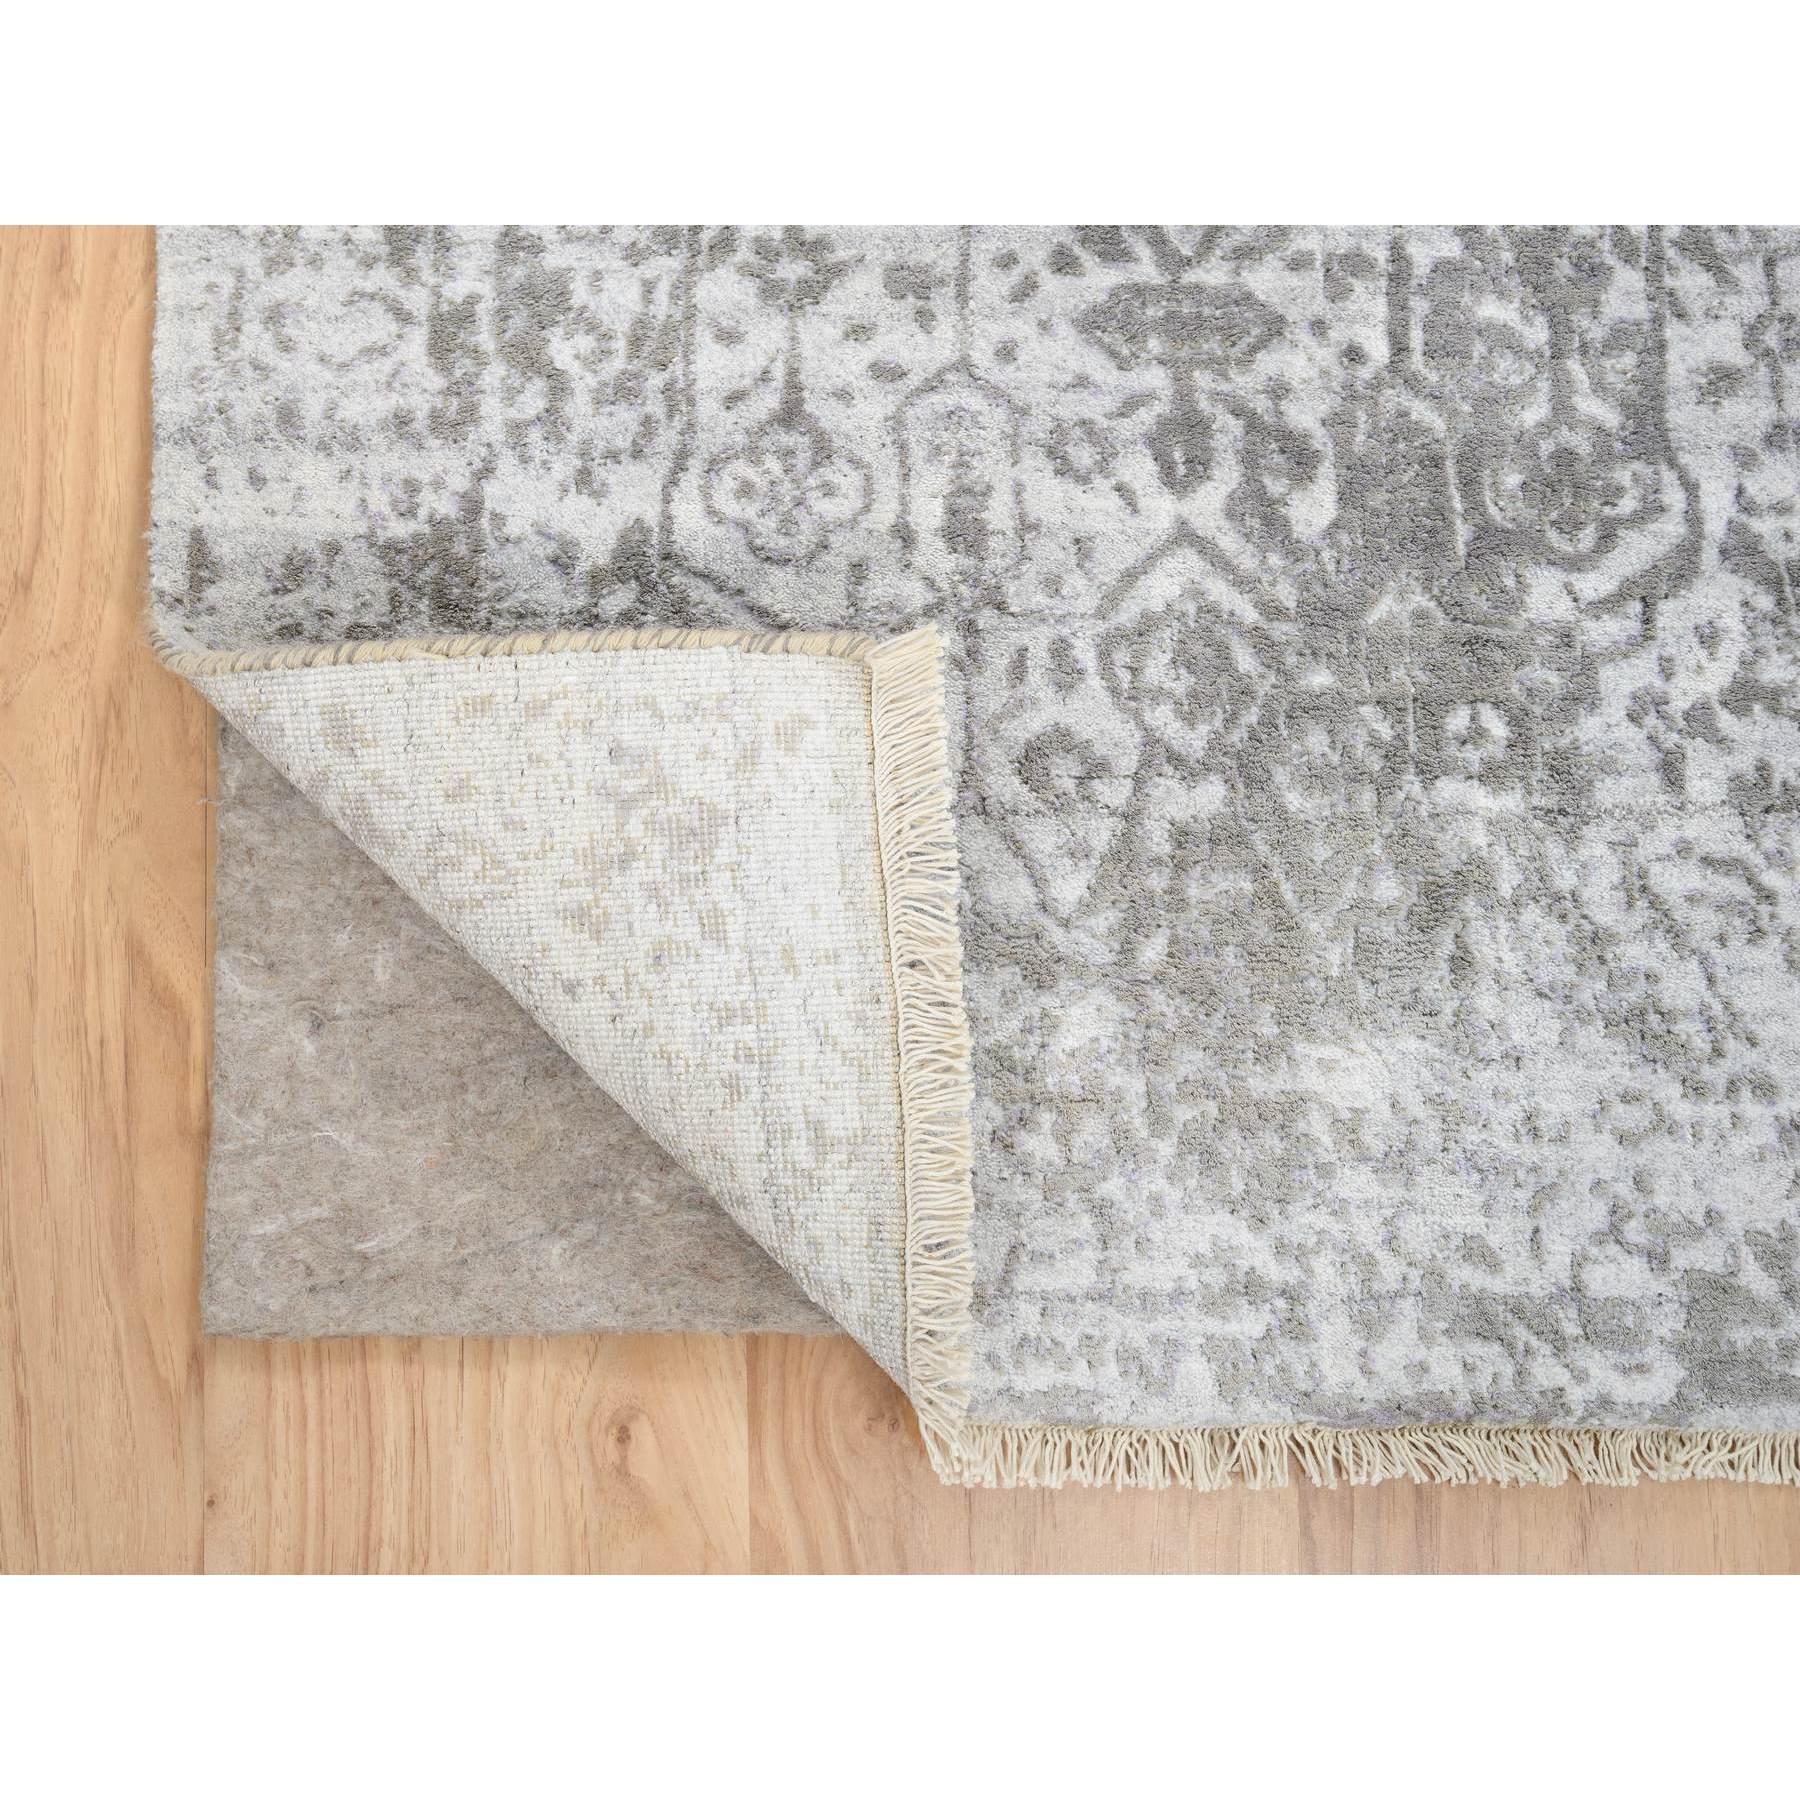 2'6"x7'10" Gray, Hand Woven Broken Persian Design, Wool and Pure Silk, Runner Oriental Rug 